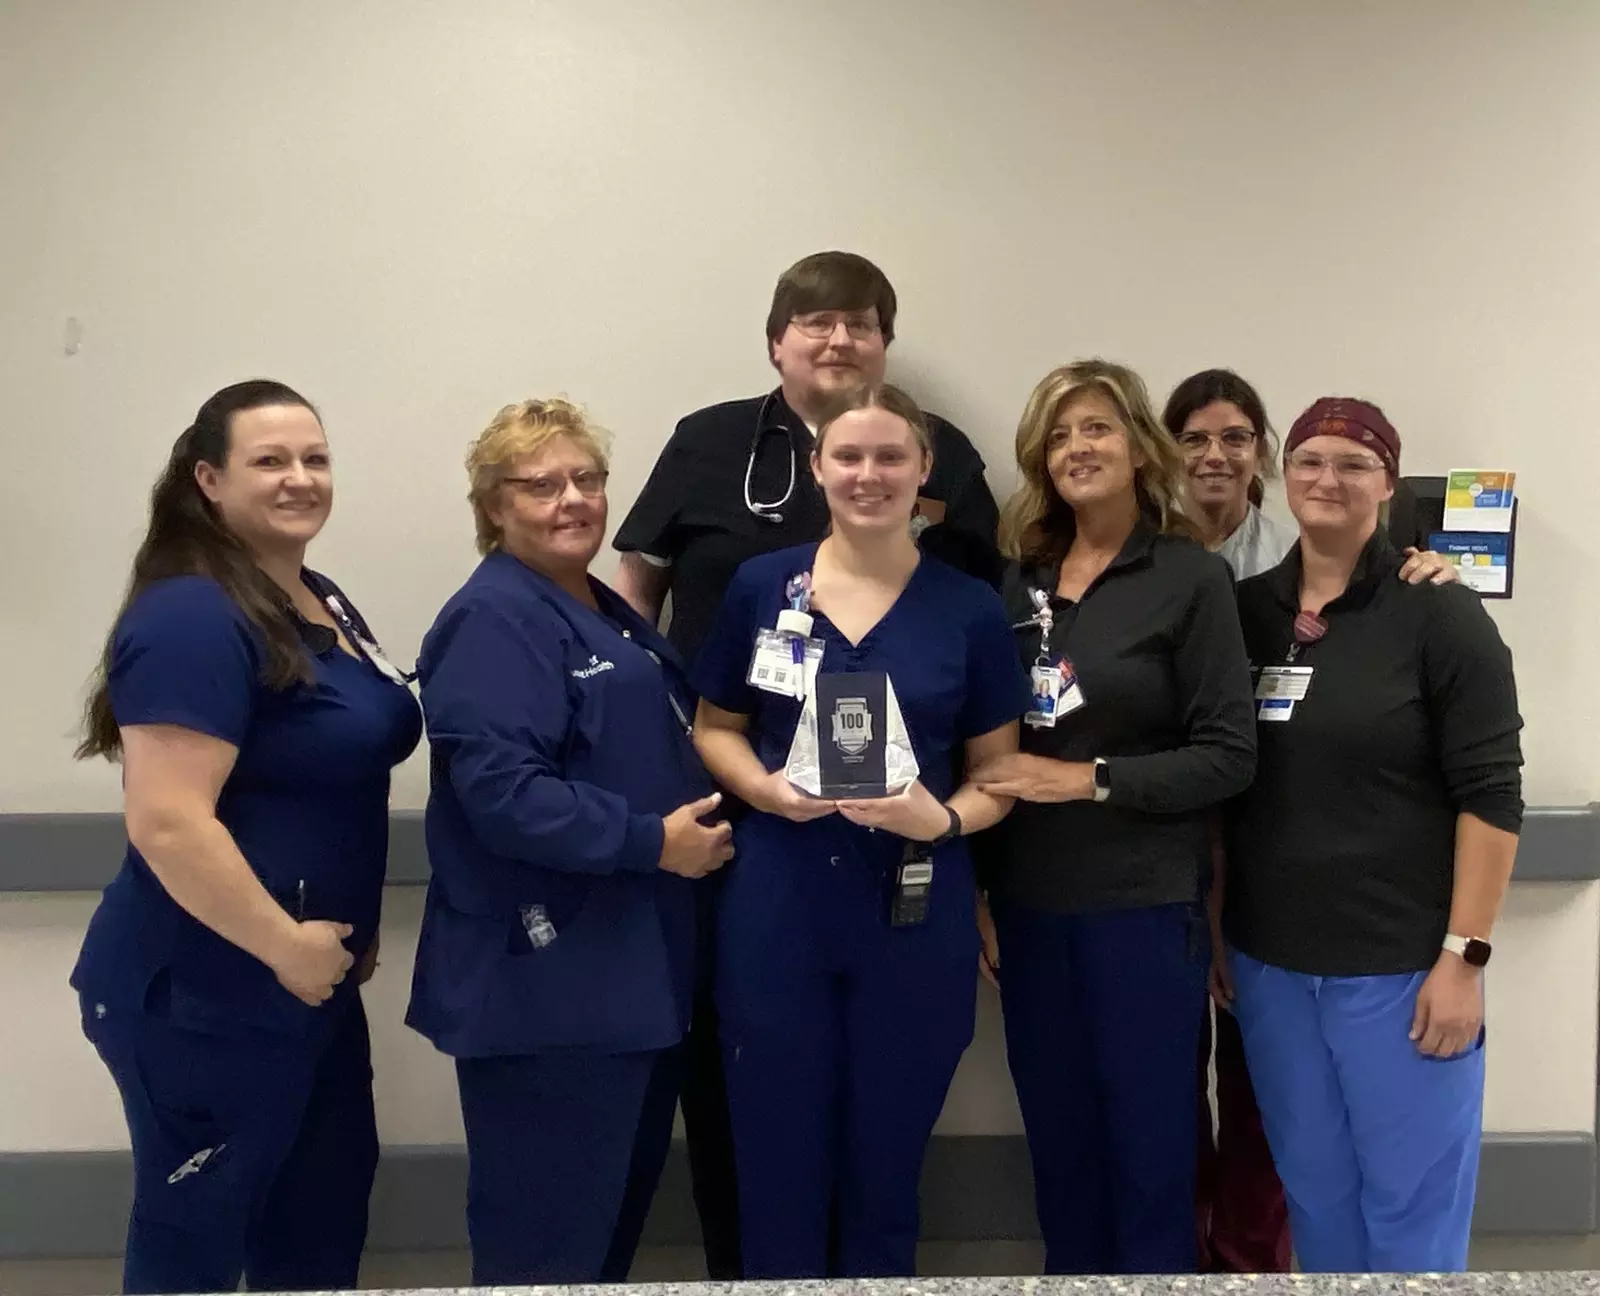 The emergency department team gathers to celebrate the 100 Top Hospital award. Left to right: April Springfield, RN, Pati Kelley, RN, Dax McKay, MD, Savannah Nix, RN, Tammy Bagley, RN, Yolanda Moyer, RN, and Rebecca Cline, PCT.